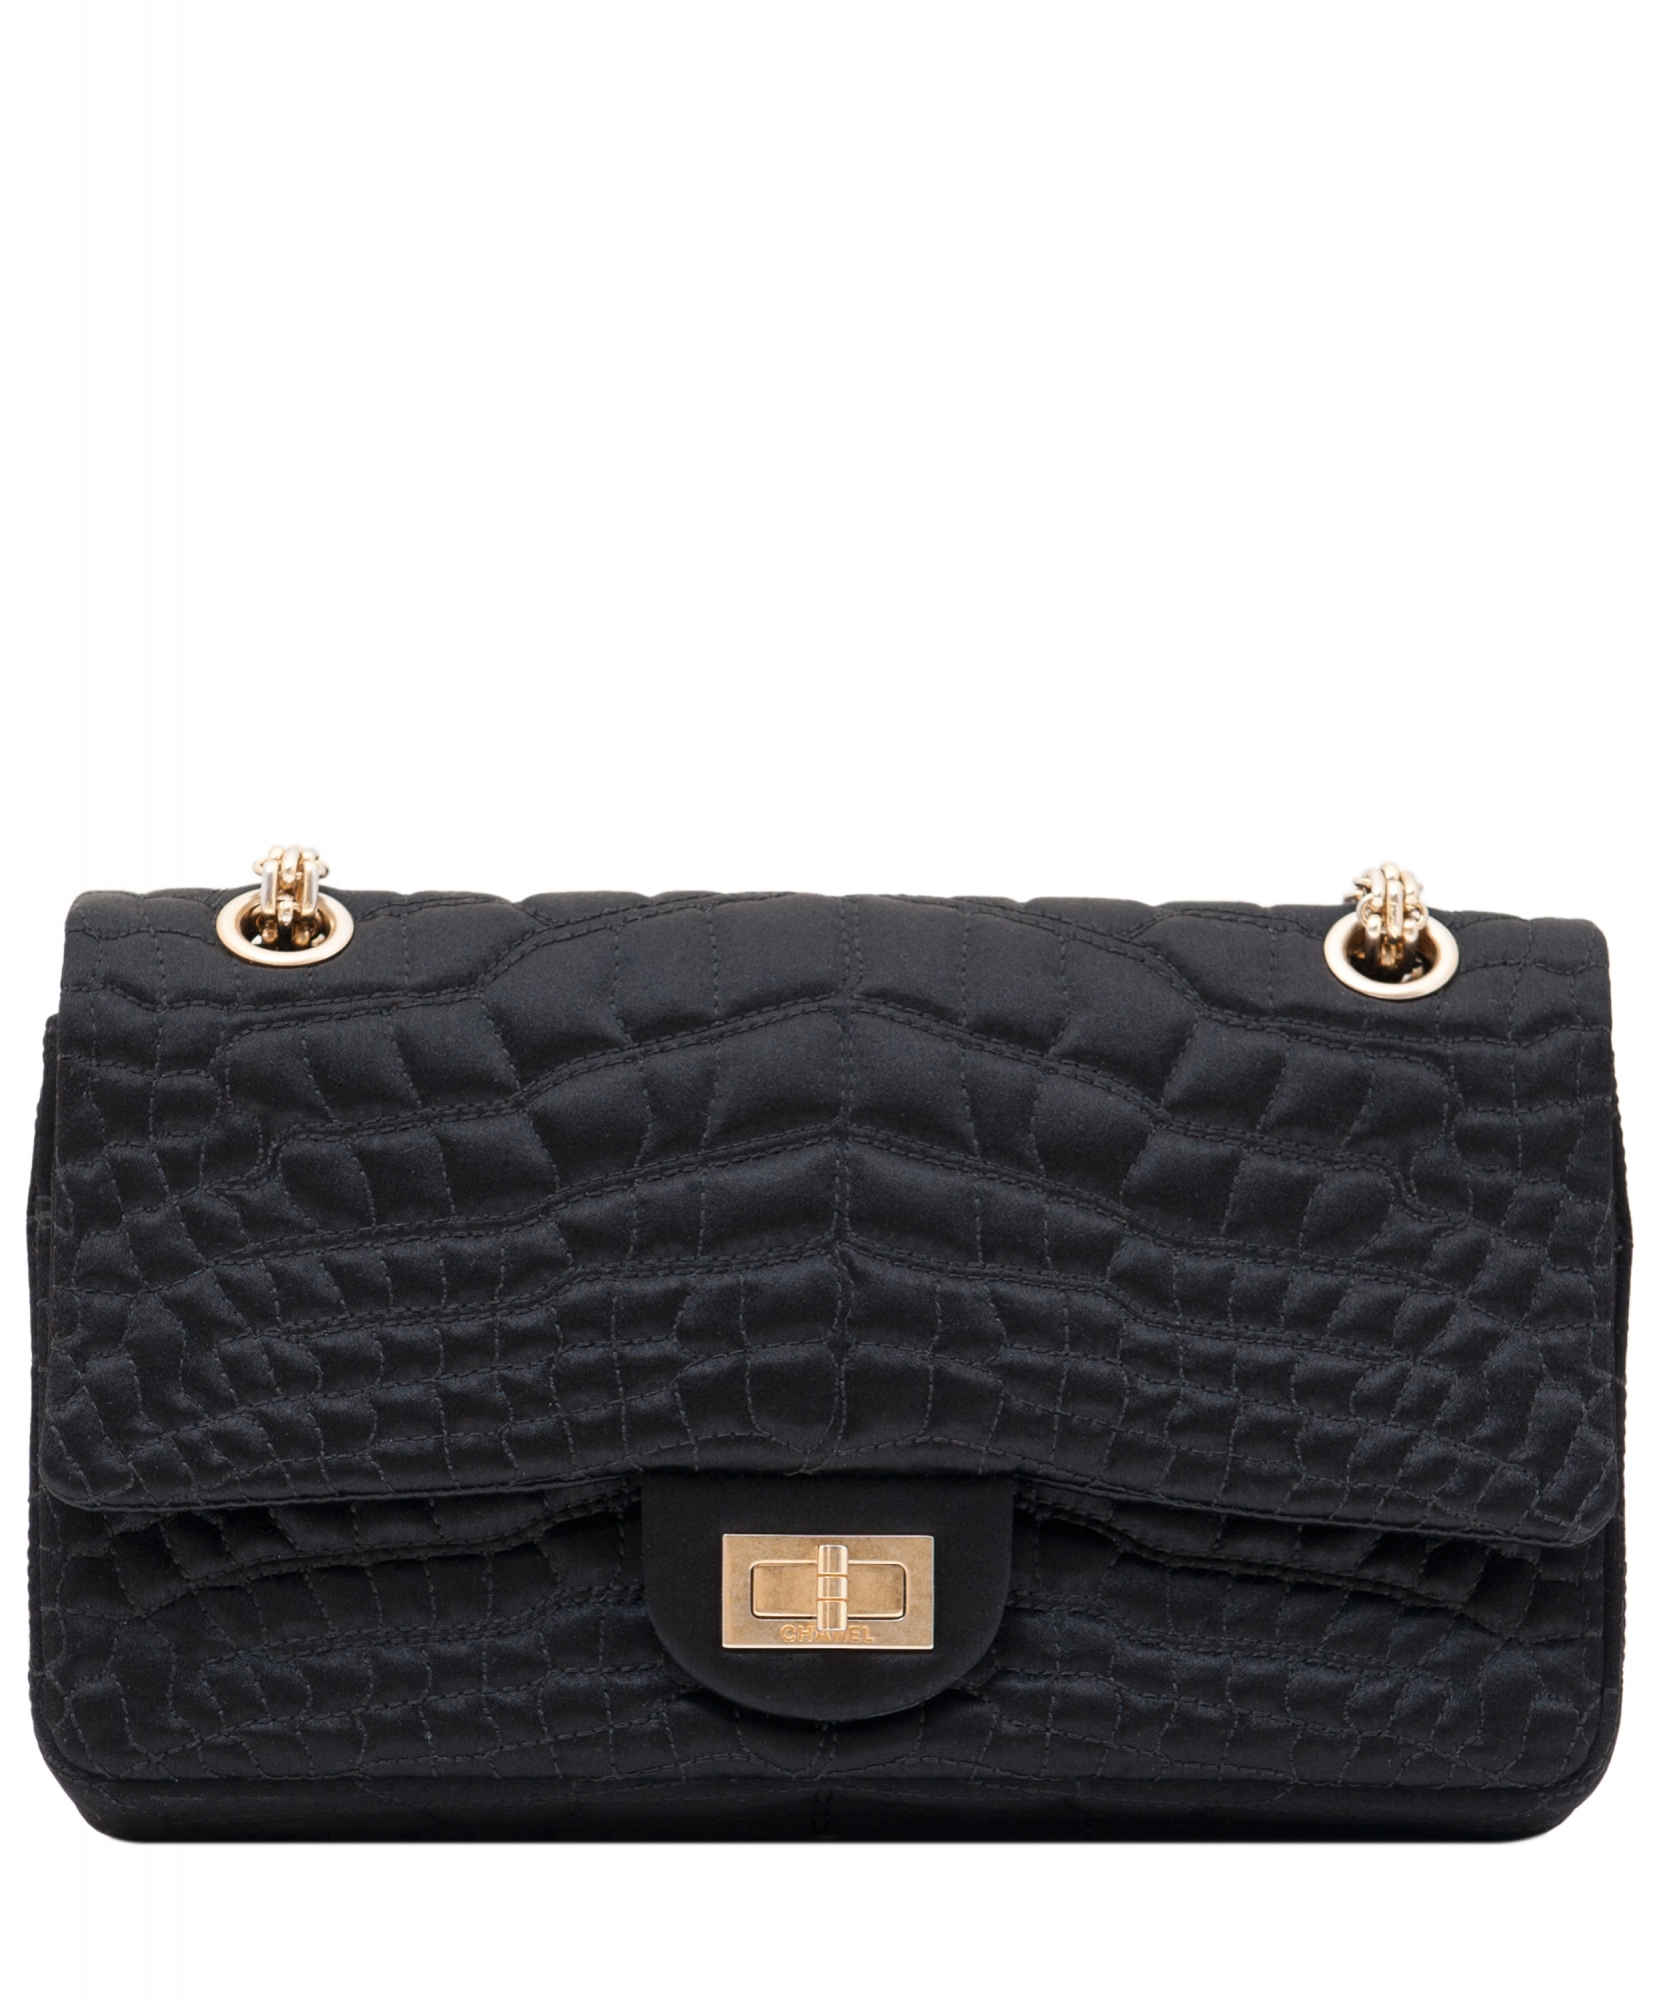 Chanel Black Satin Croc Embossed  Reissue Flap Bag - Chanel | La Doyenne